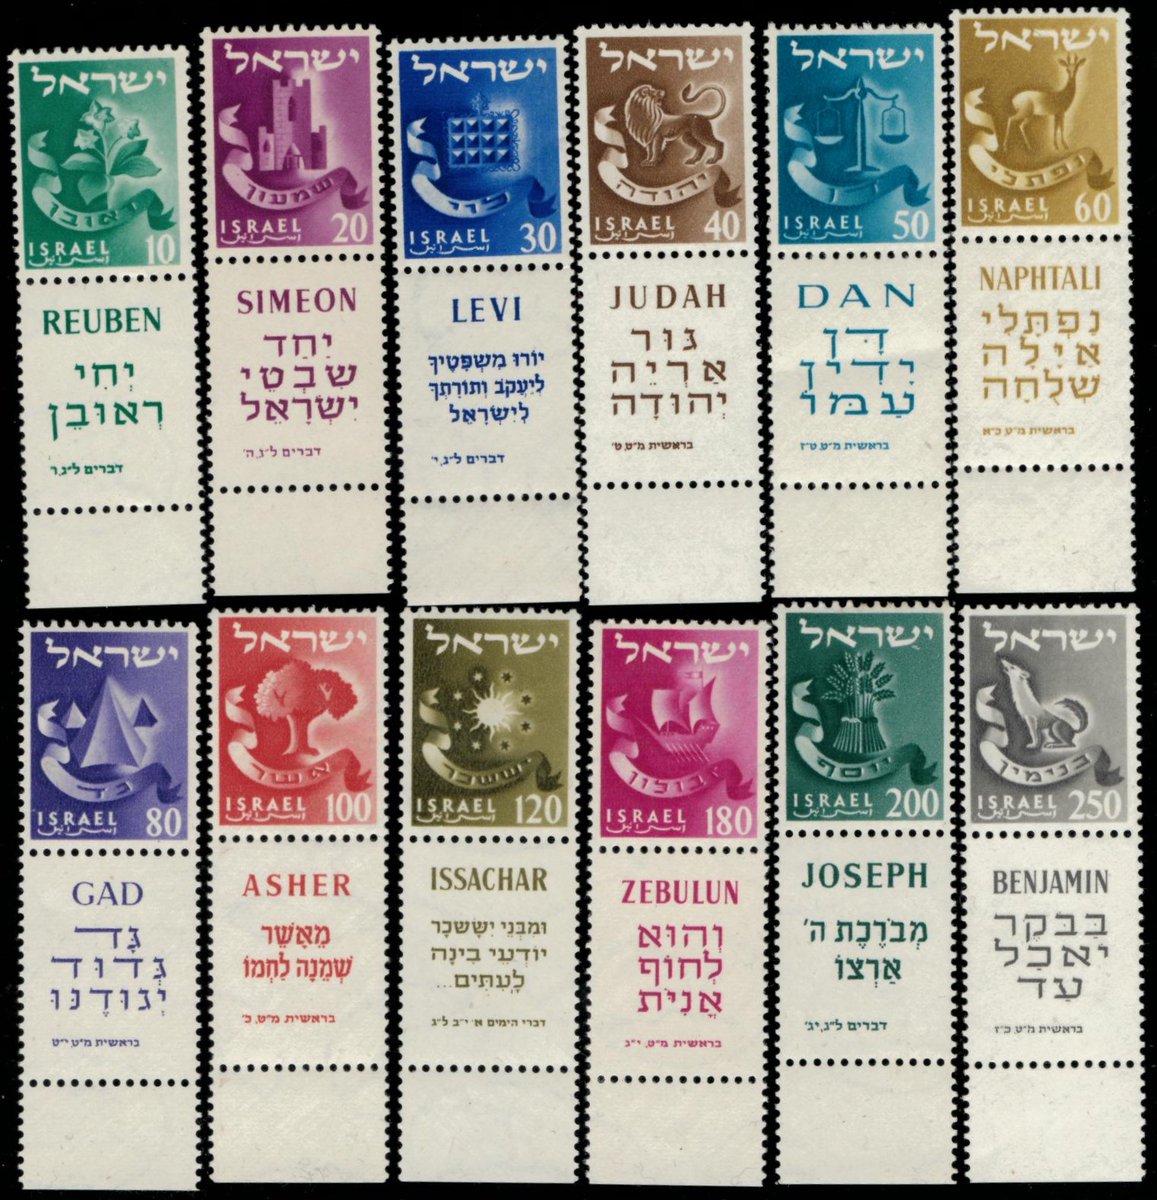 Israel Stamps, The Twelve Tribes, Scott 105-116, Set of Twelve Stamps, 1955-57, MNH, Message Us for A Huge Selection of Israel Stamps #stamps #stampscollection #stampcollecting #philatelic #Israelstamps #Israel #12tribesofisrael #12tribes